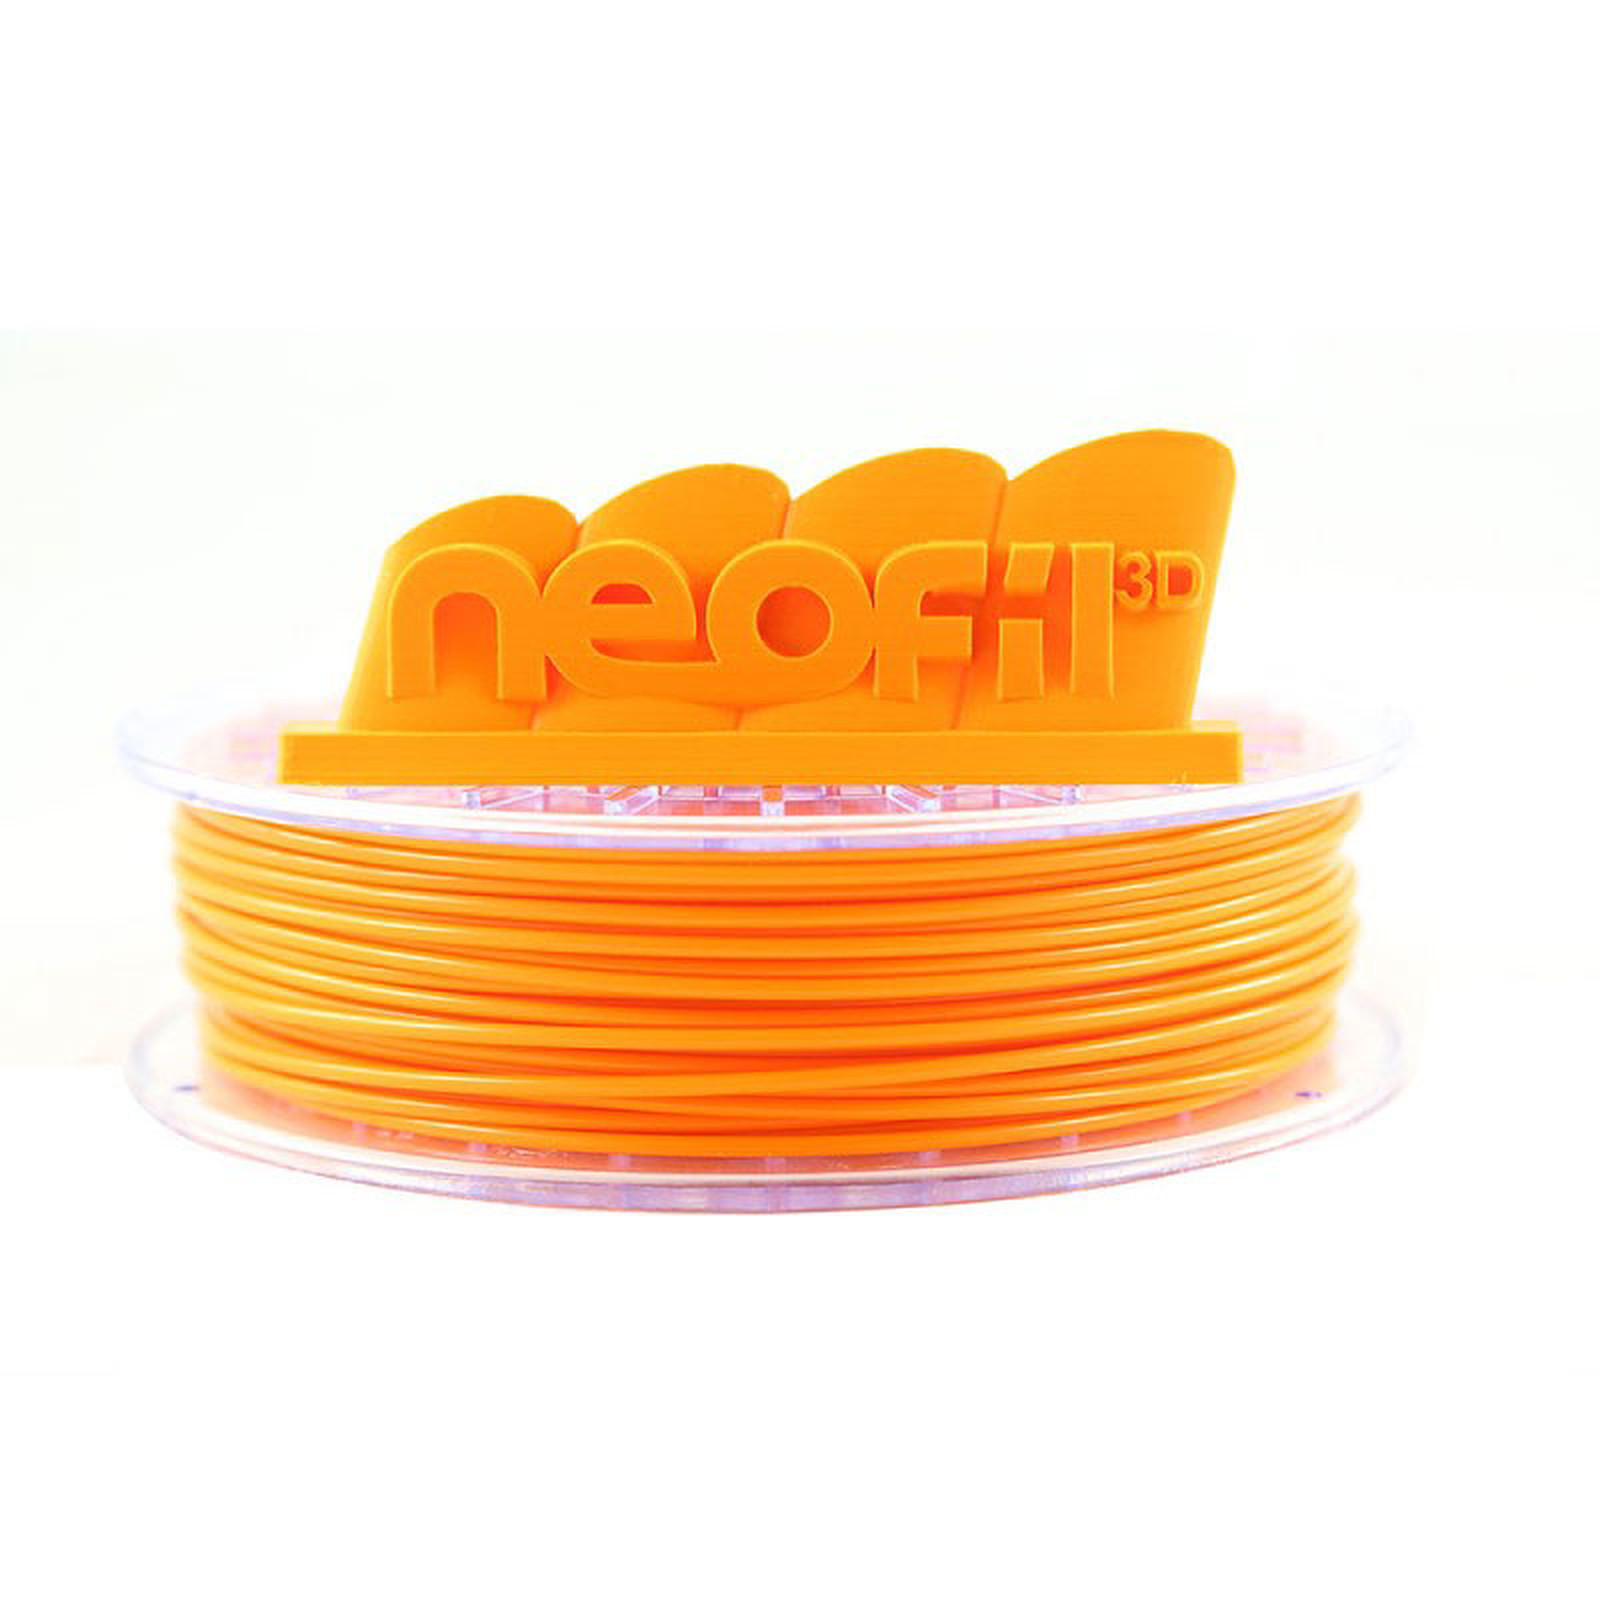 Neofil3D Bobine PLA 1.75mm 750g - Orange - Filament 3D Neofil3D